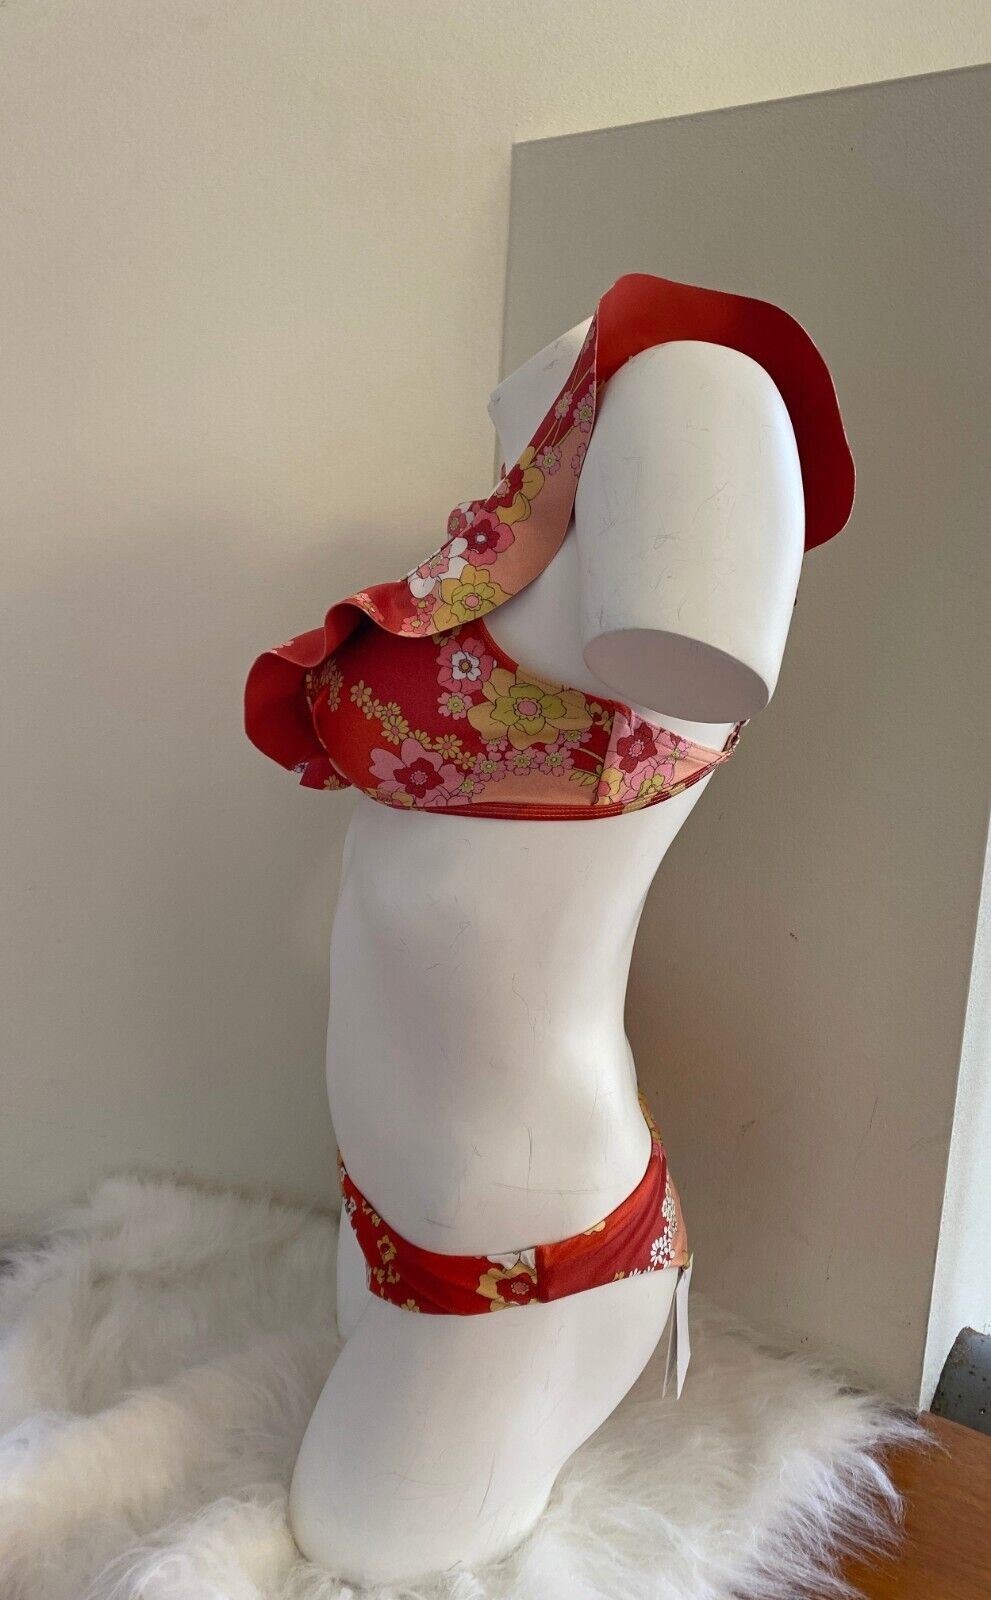 Zimmermann Lola Waterfall Frill Bikini Set | Raspberry Floral, Low Rise Bottoms